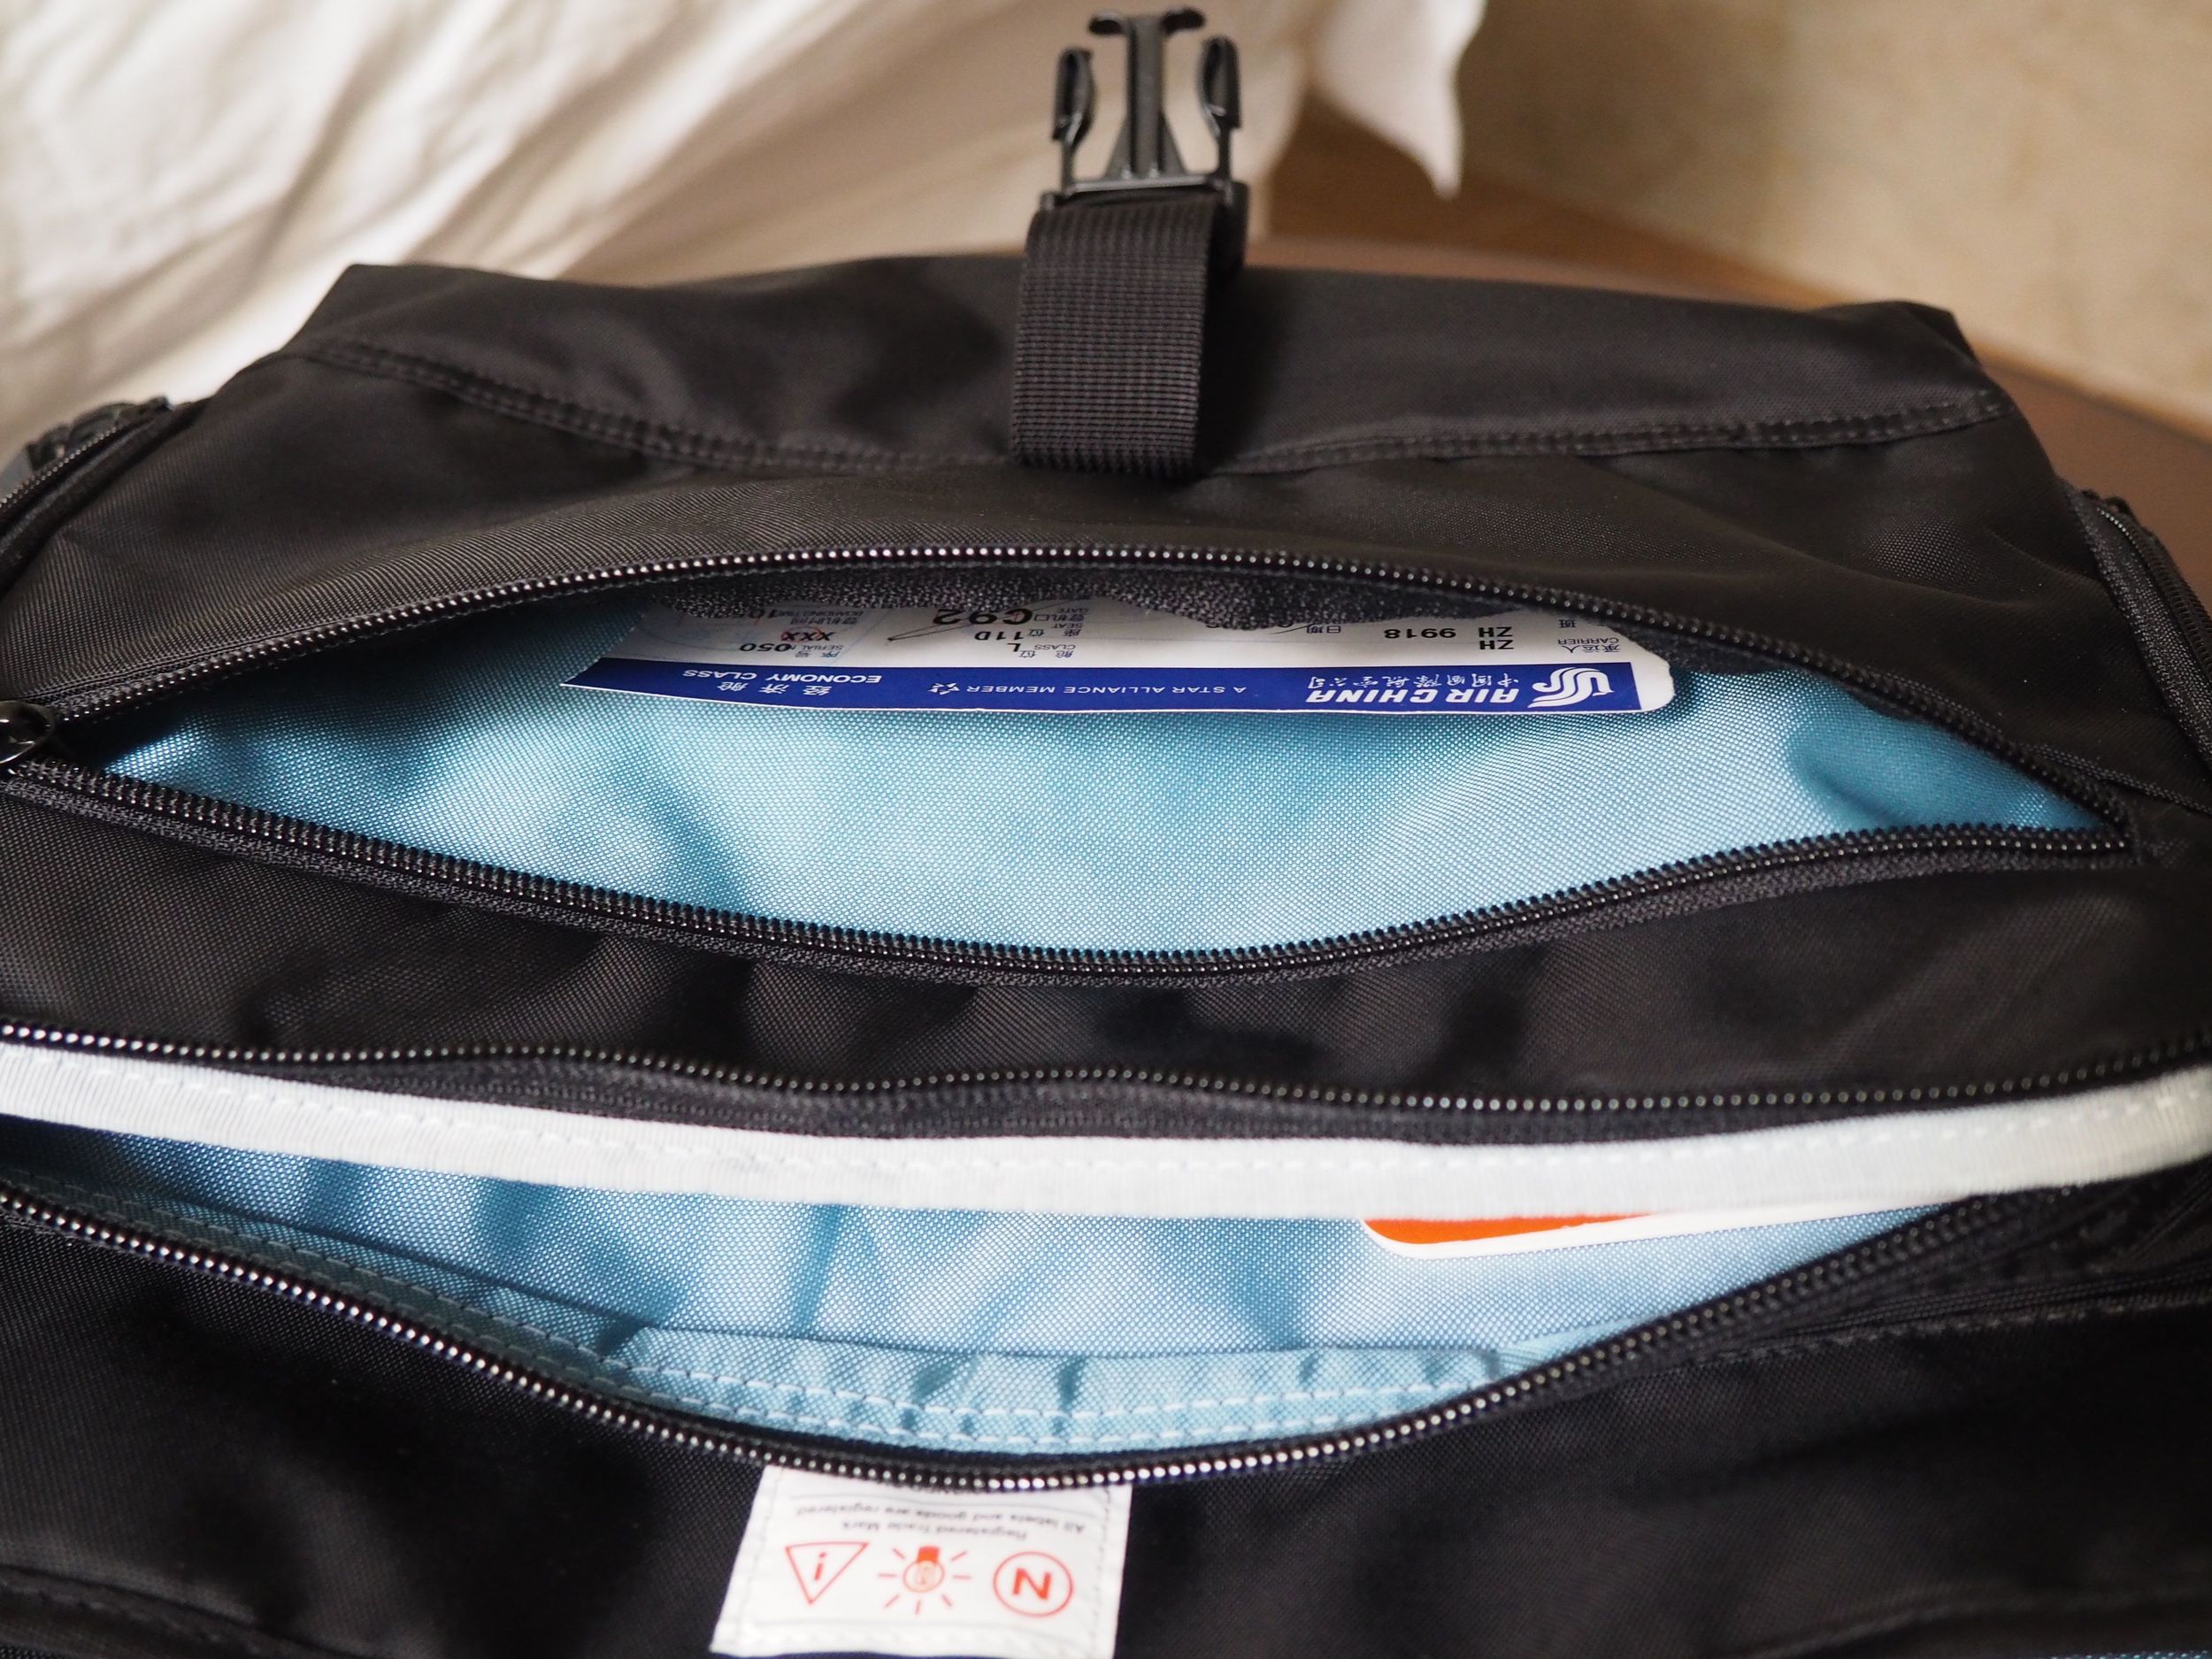 wise-walker OS-01 urban day bag front zip pocket